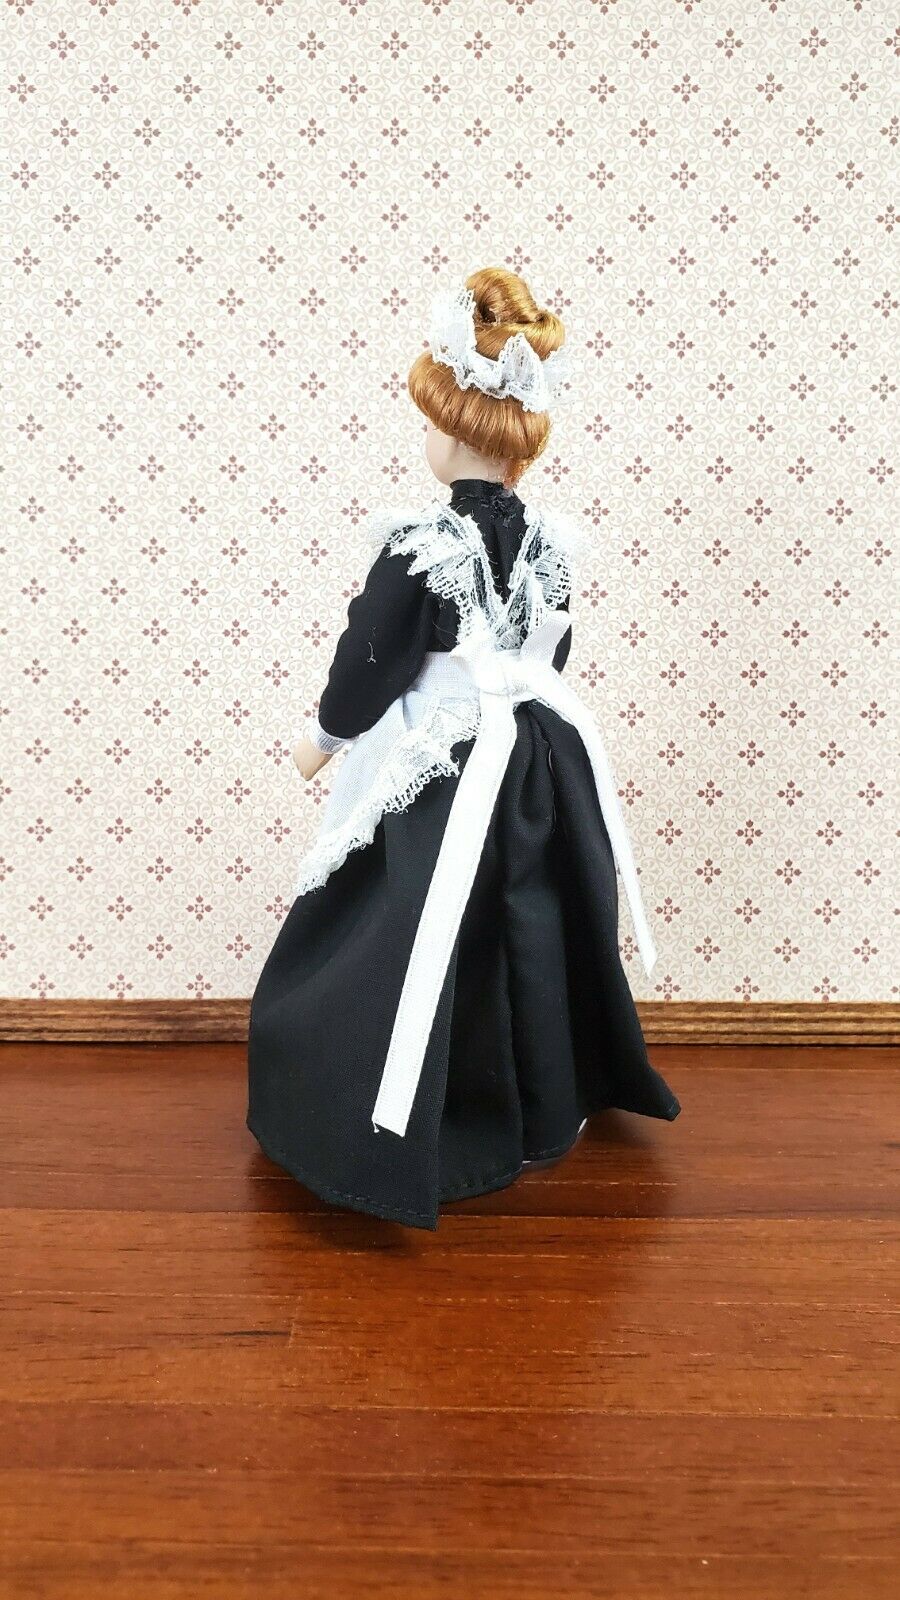 Dollhouse Miniature Maid Housekeeper Doll Porcelain Poseable 1:12 Scale w/ Apron - Miniature Crush